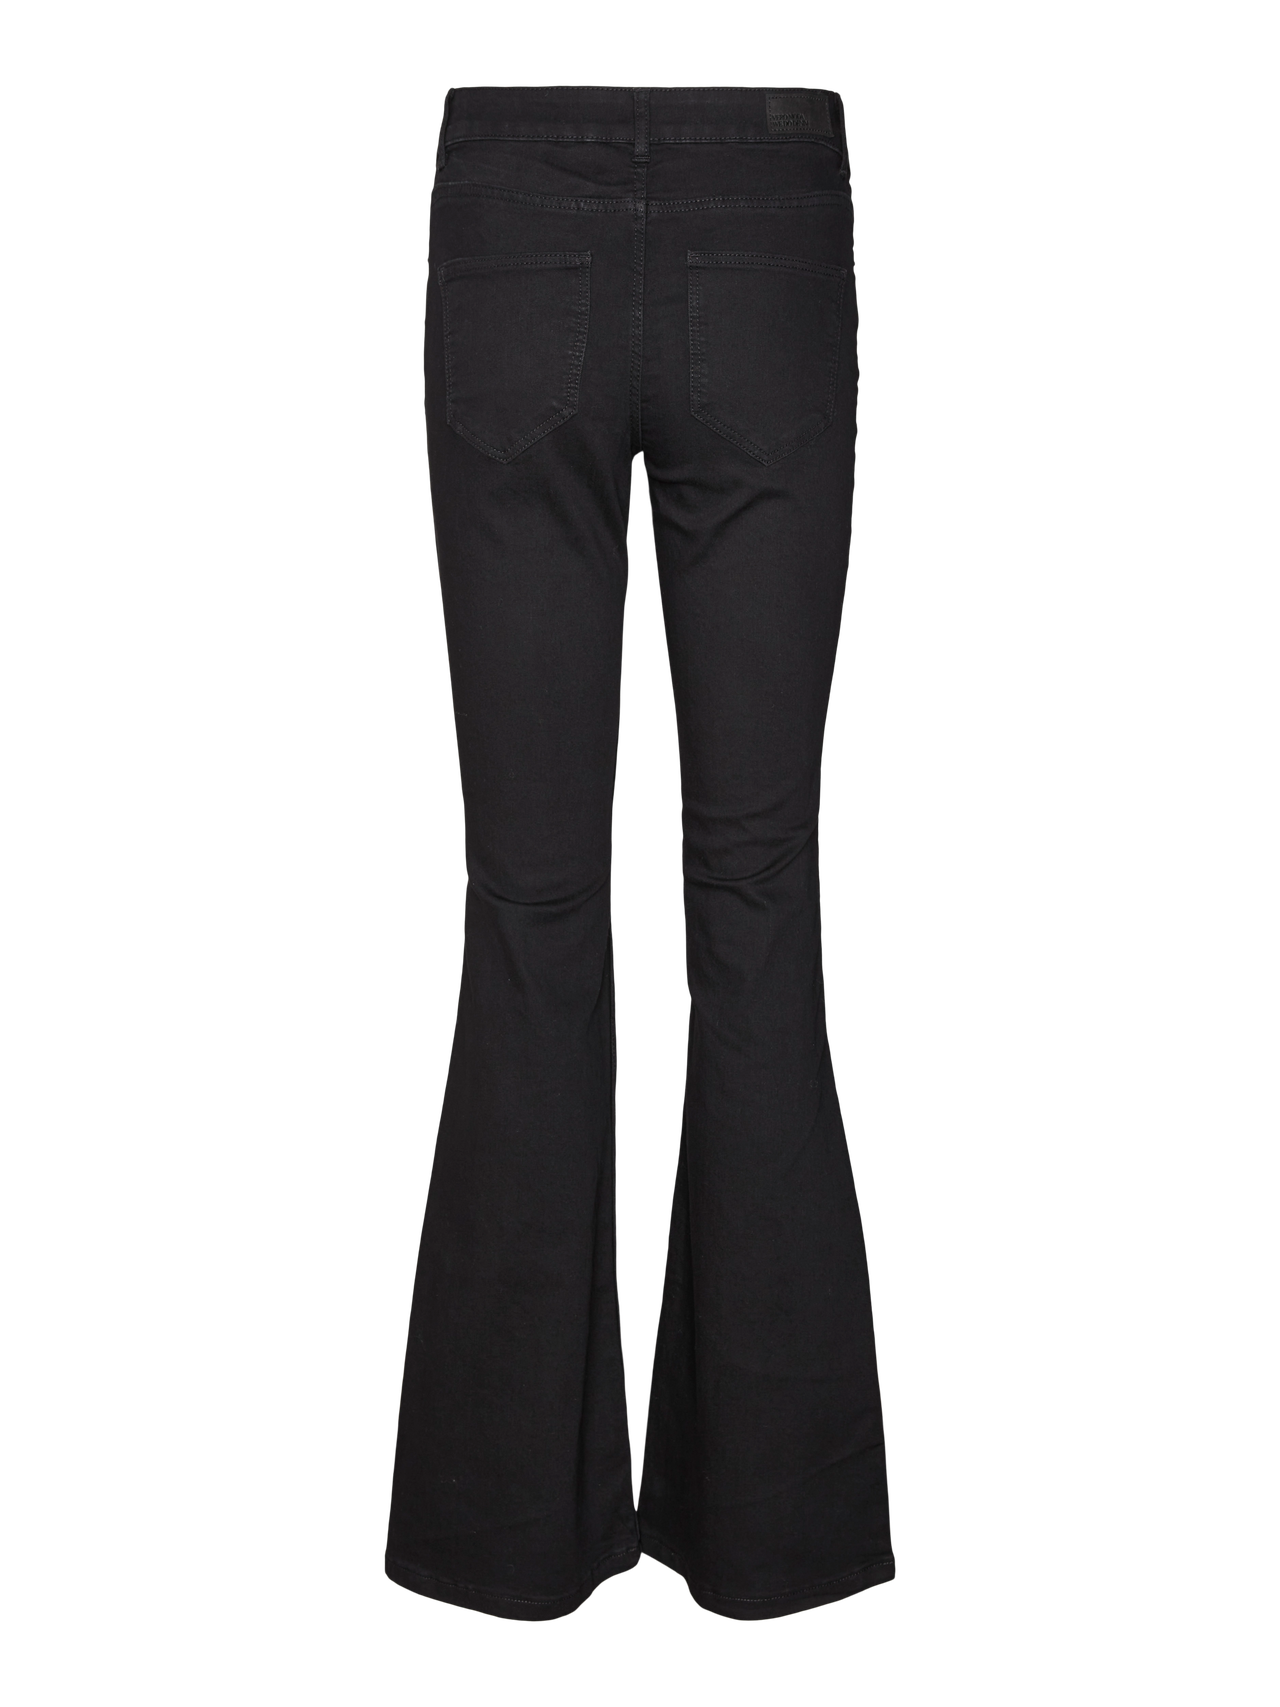 Vero Moda VMSIGI Ausgestellt Jeans -Black Denim - 10313051